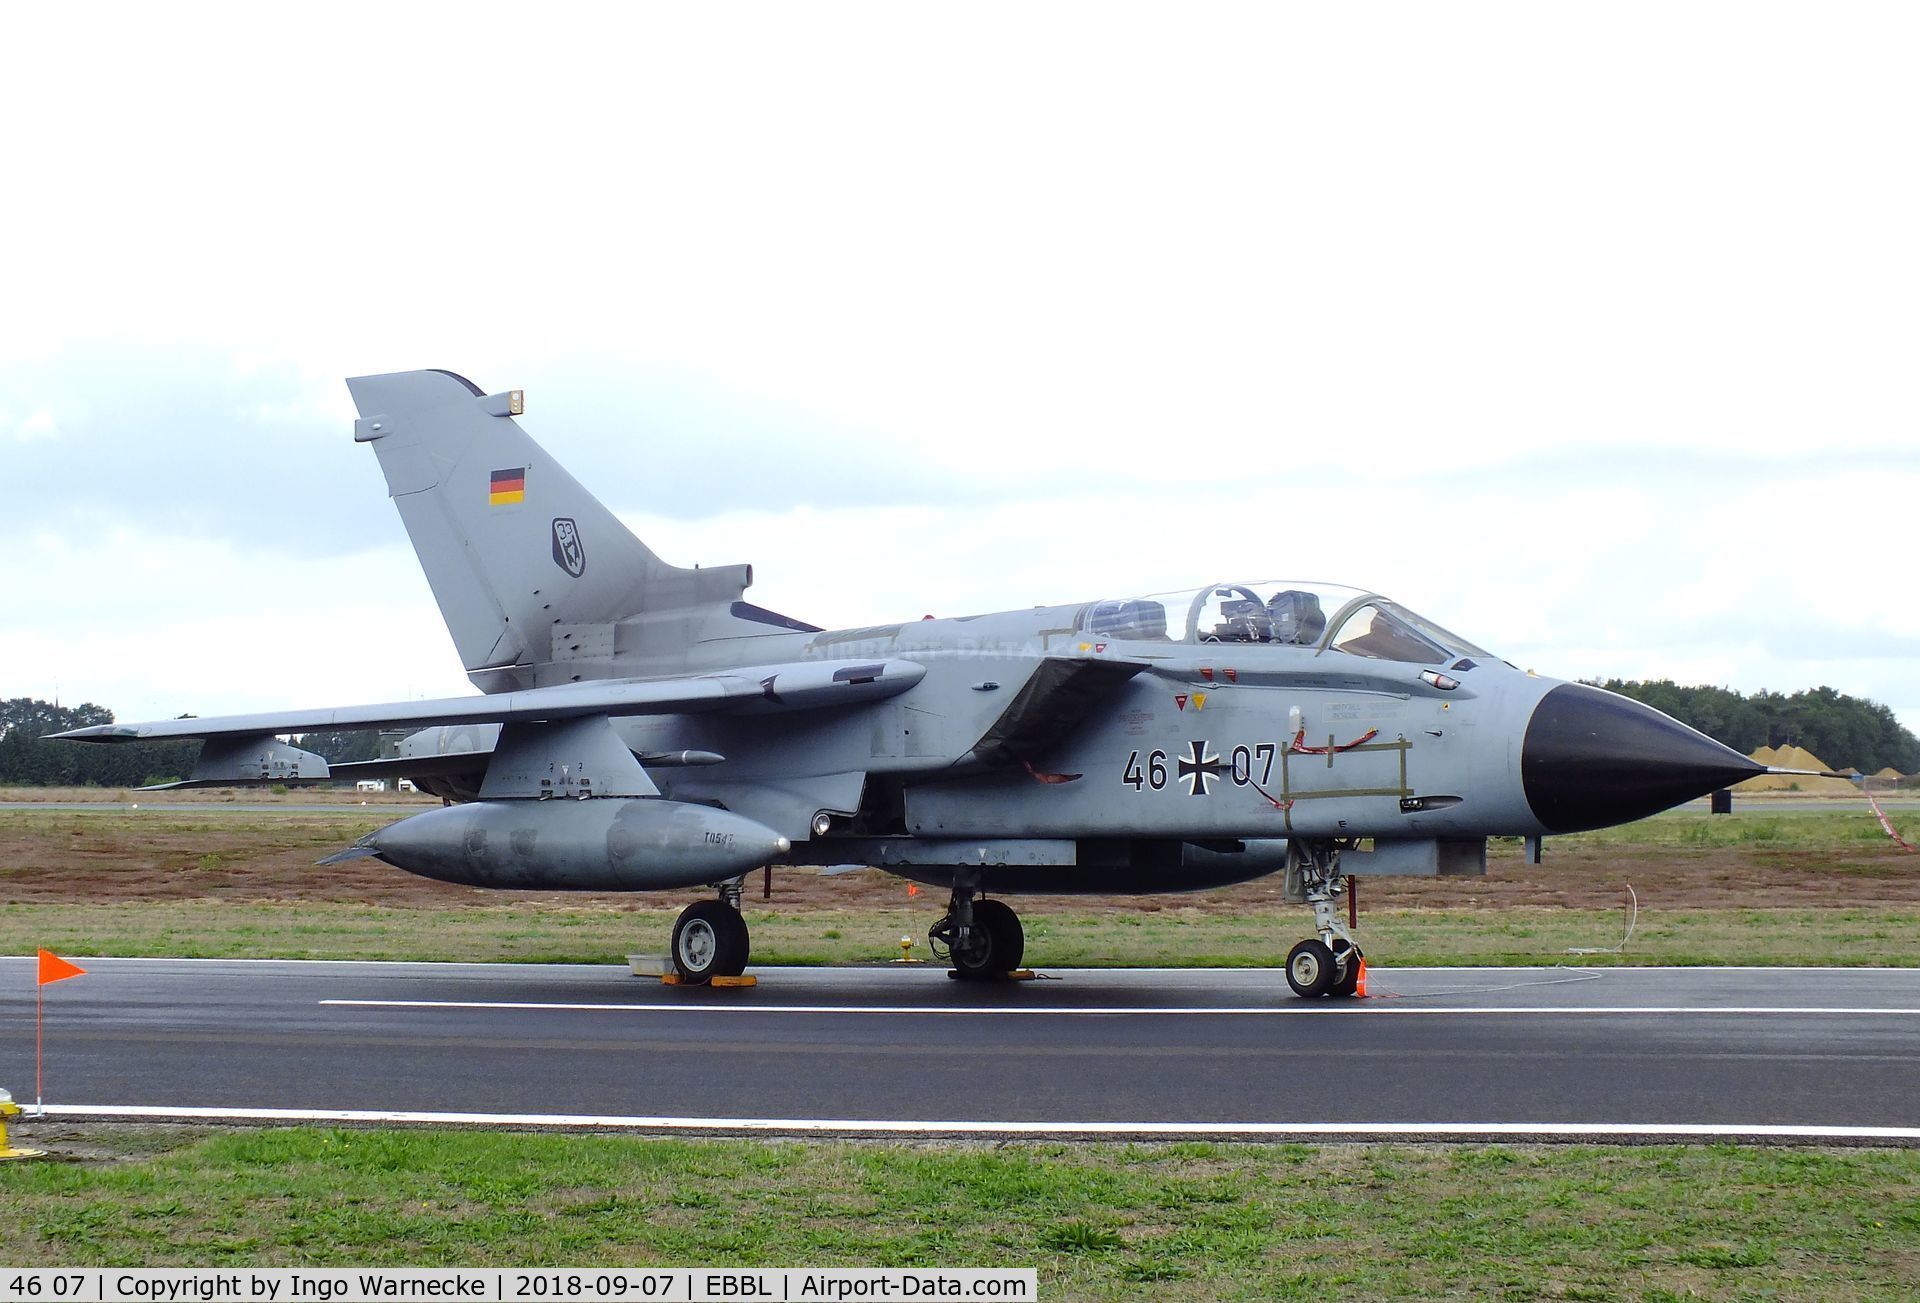 46 07, Panavia Tornado IDS(T) C/N 759/GT065/4307, Panavia Tornado IDS of the Luftwaffe (German Air Force) at the 2018 BAFD spotters day, Kleine Brogel airbase